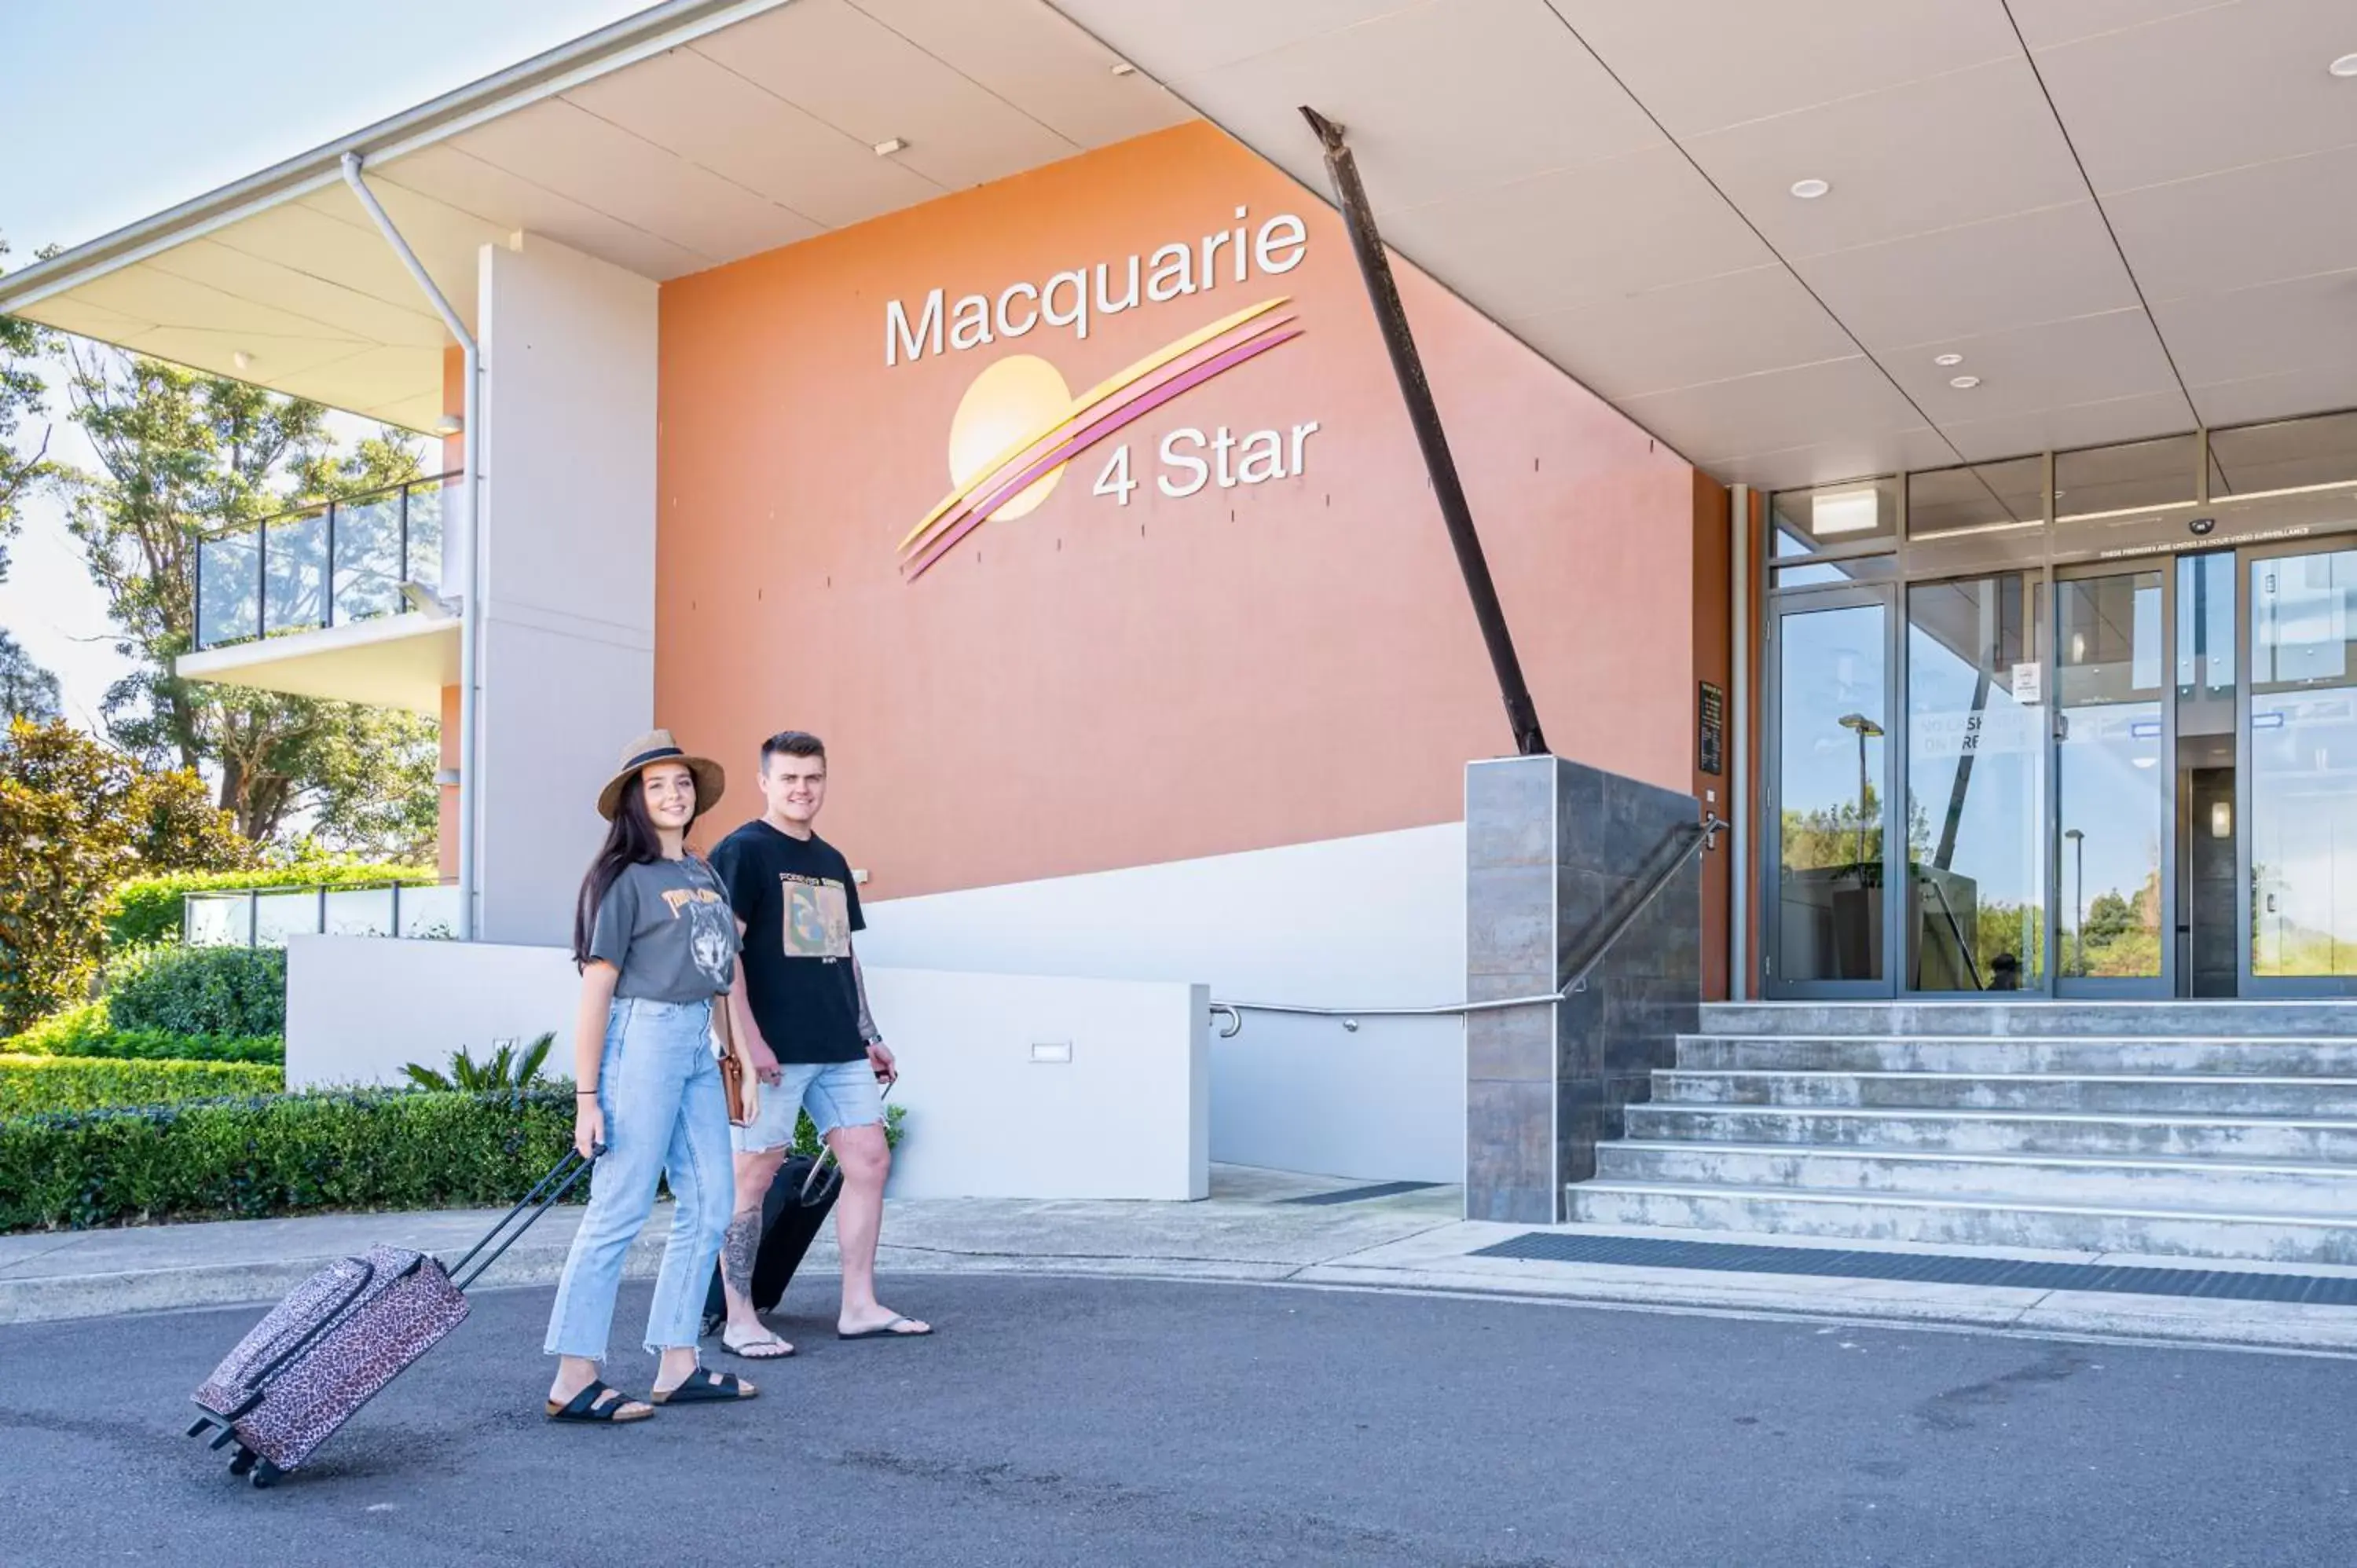 Facade/entrance in Macquarie 4 Star